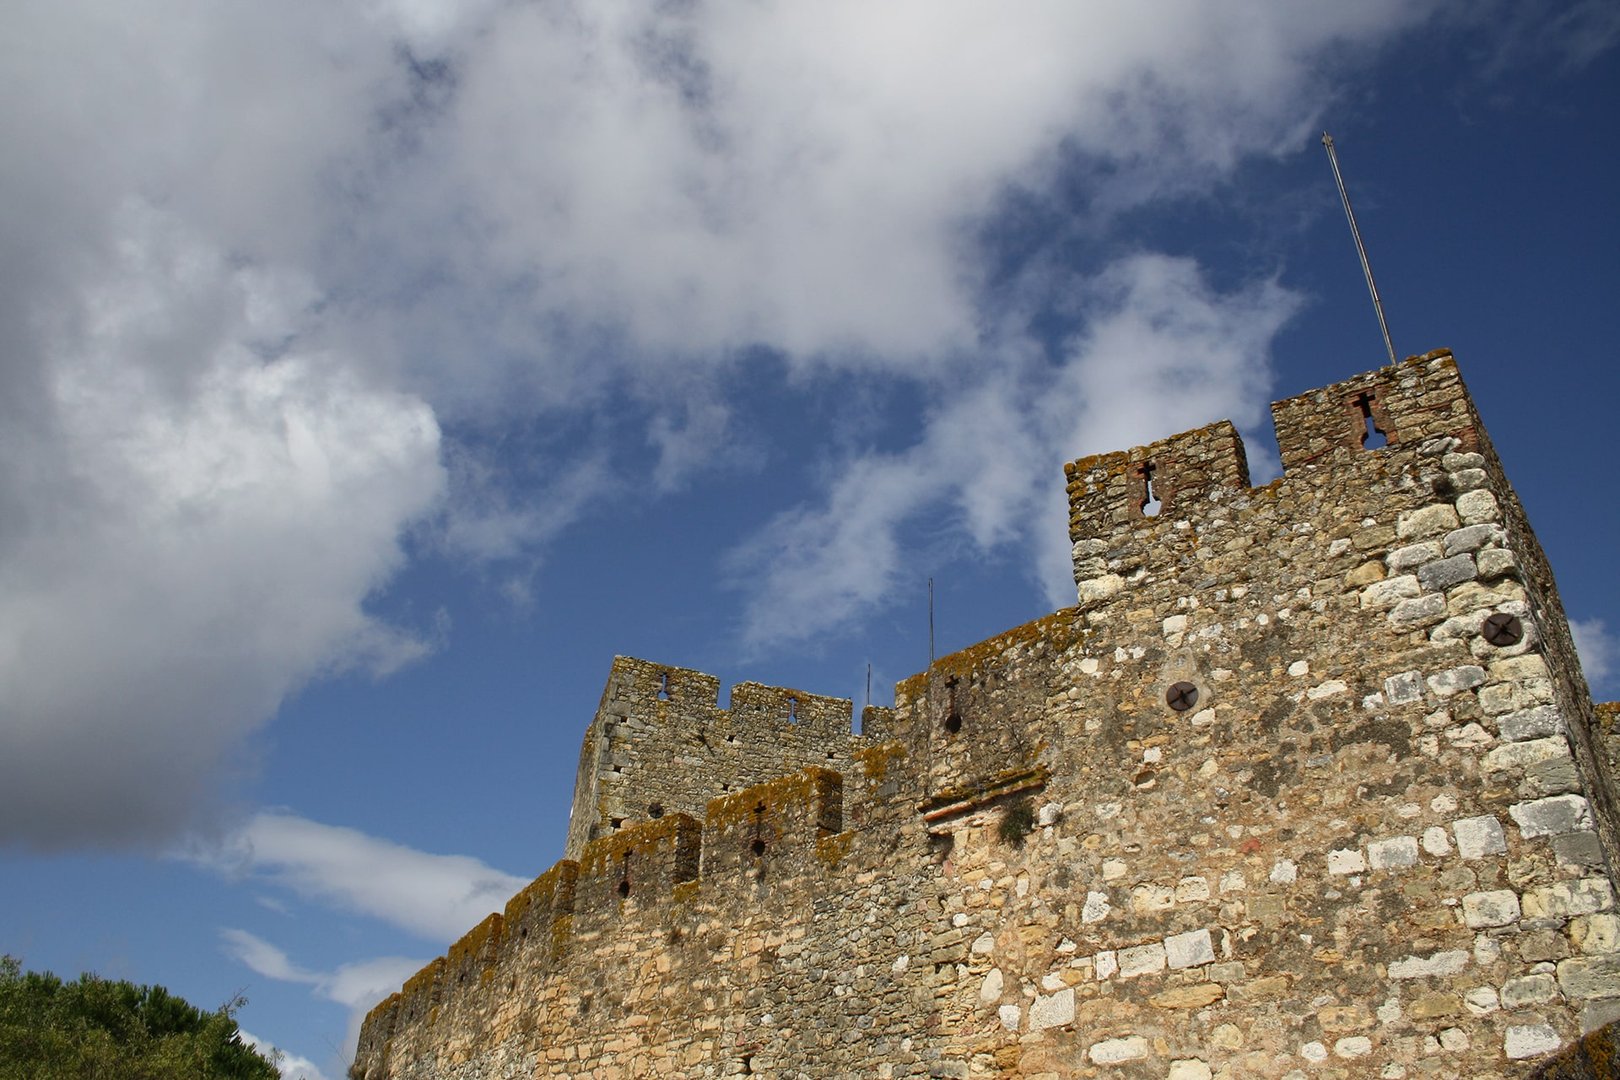 Castelo de Tomar ou Castelo dos Templários